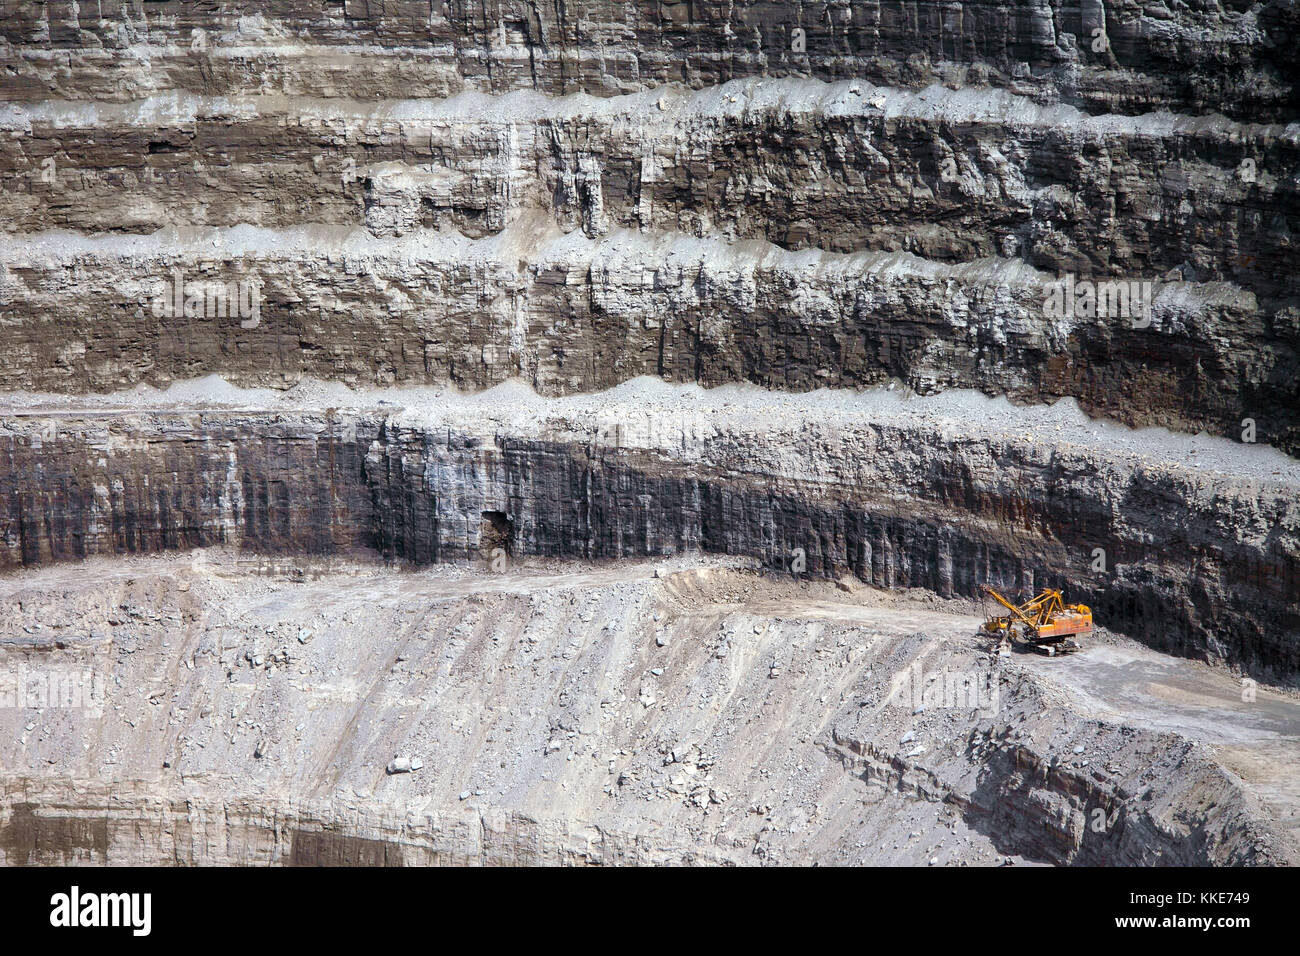 Excavator in diamond open mine - industrial process Stock Photo